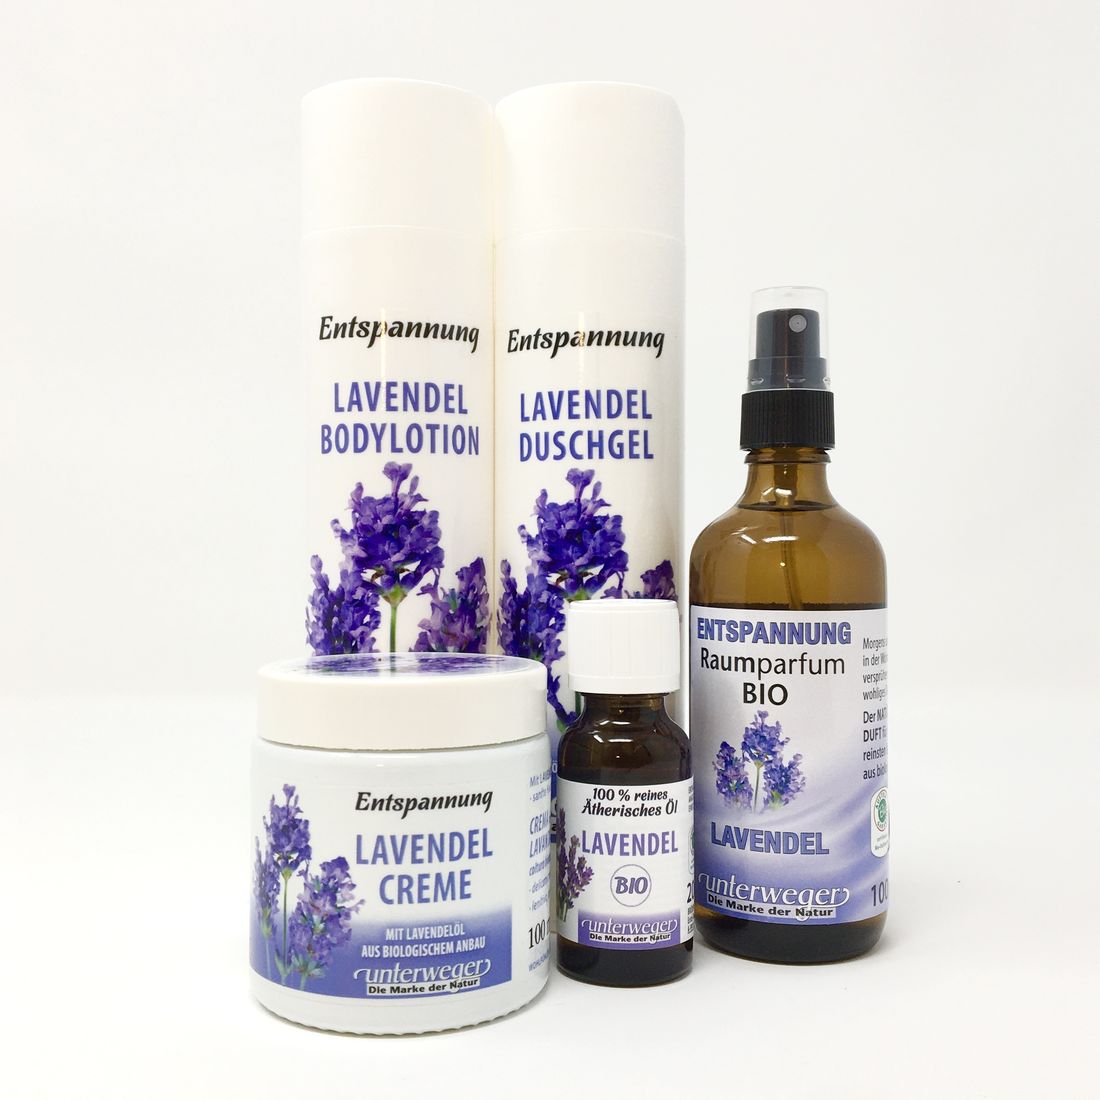 Unterweger Lavendel/Duschgel/250 ml